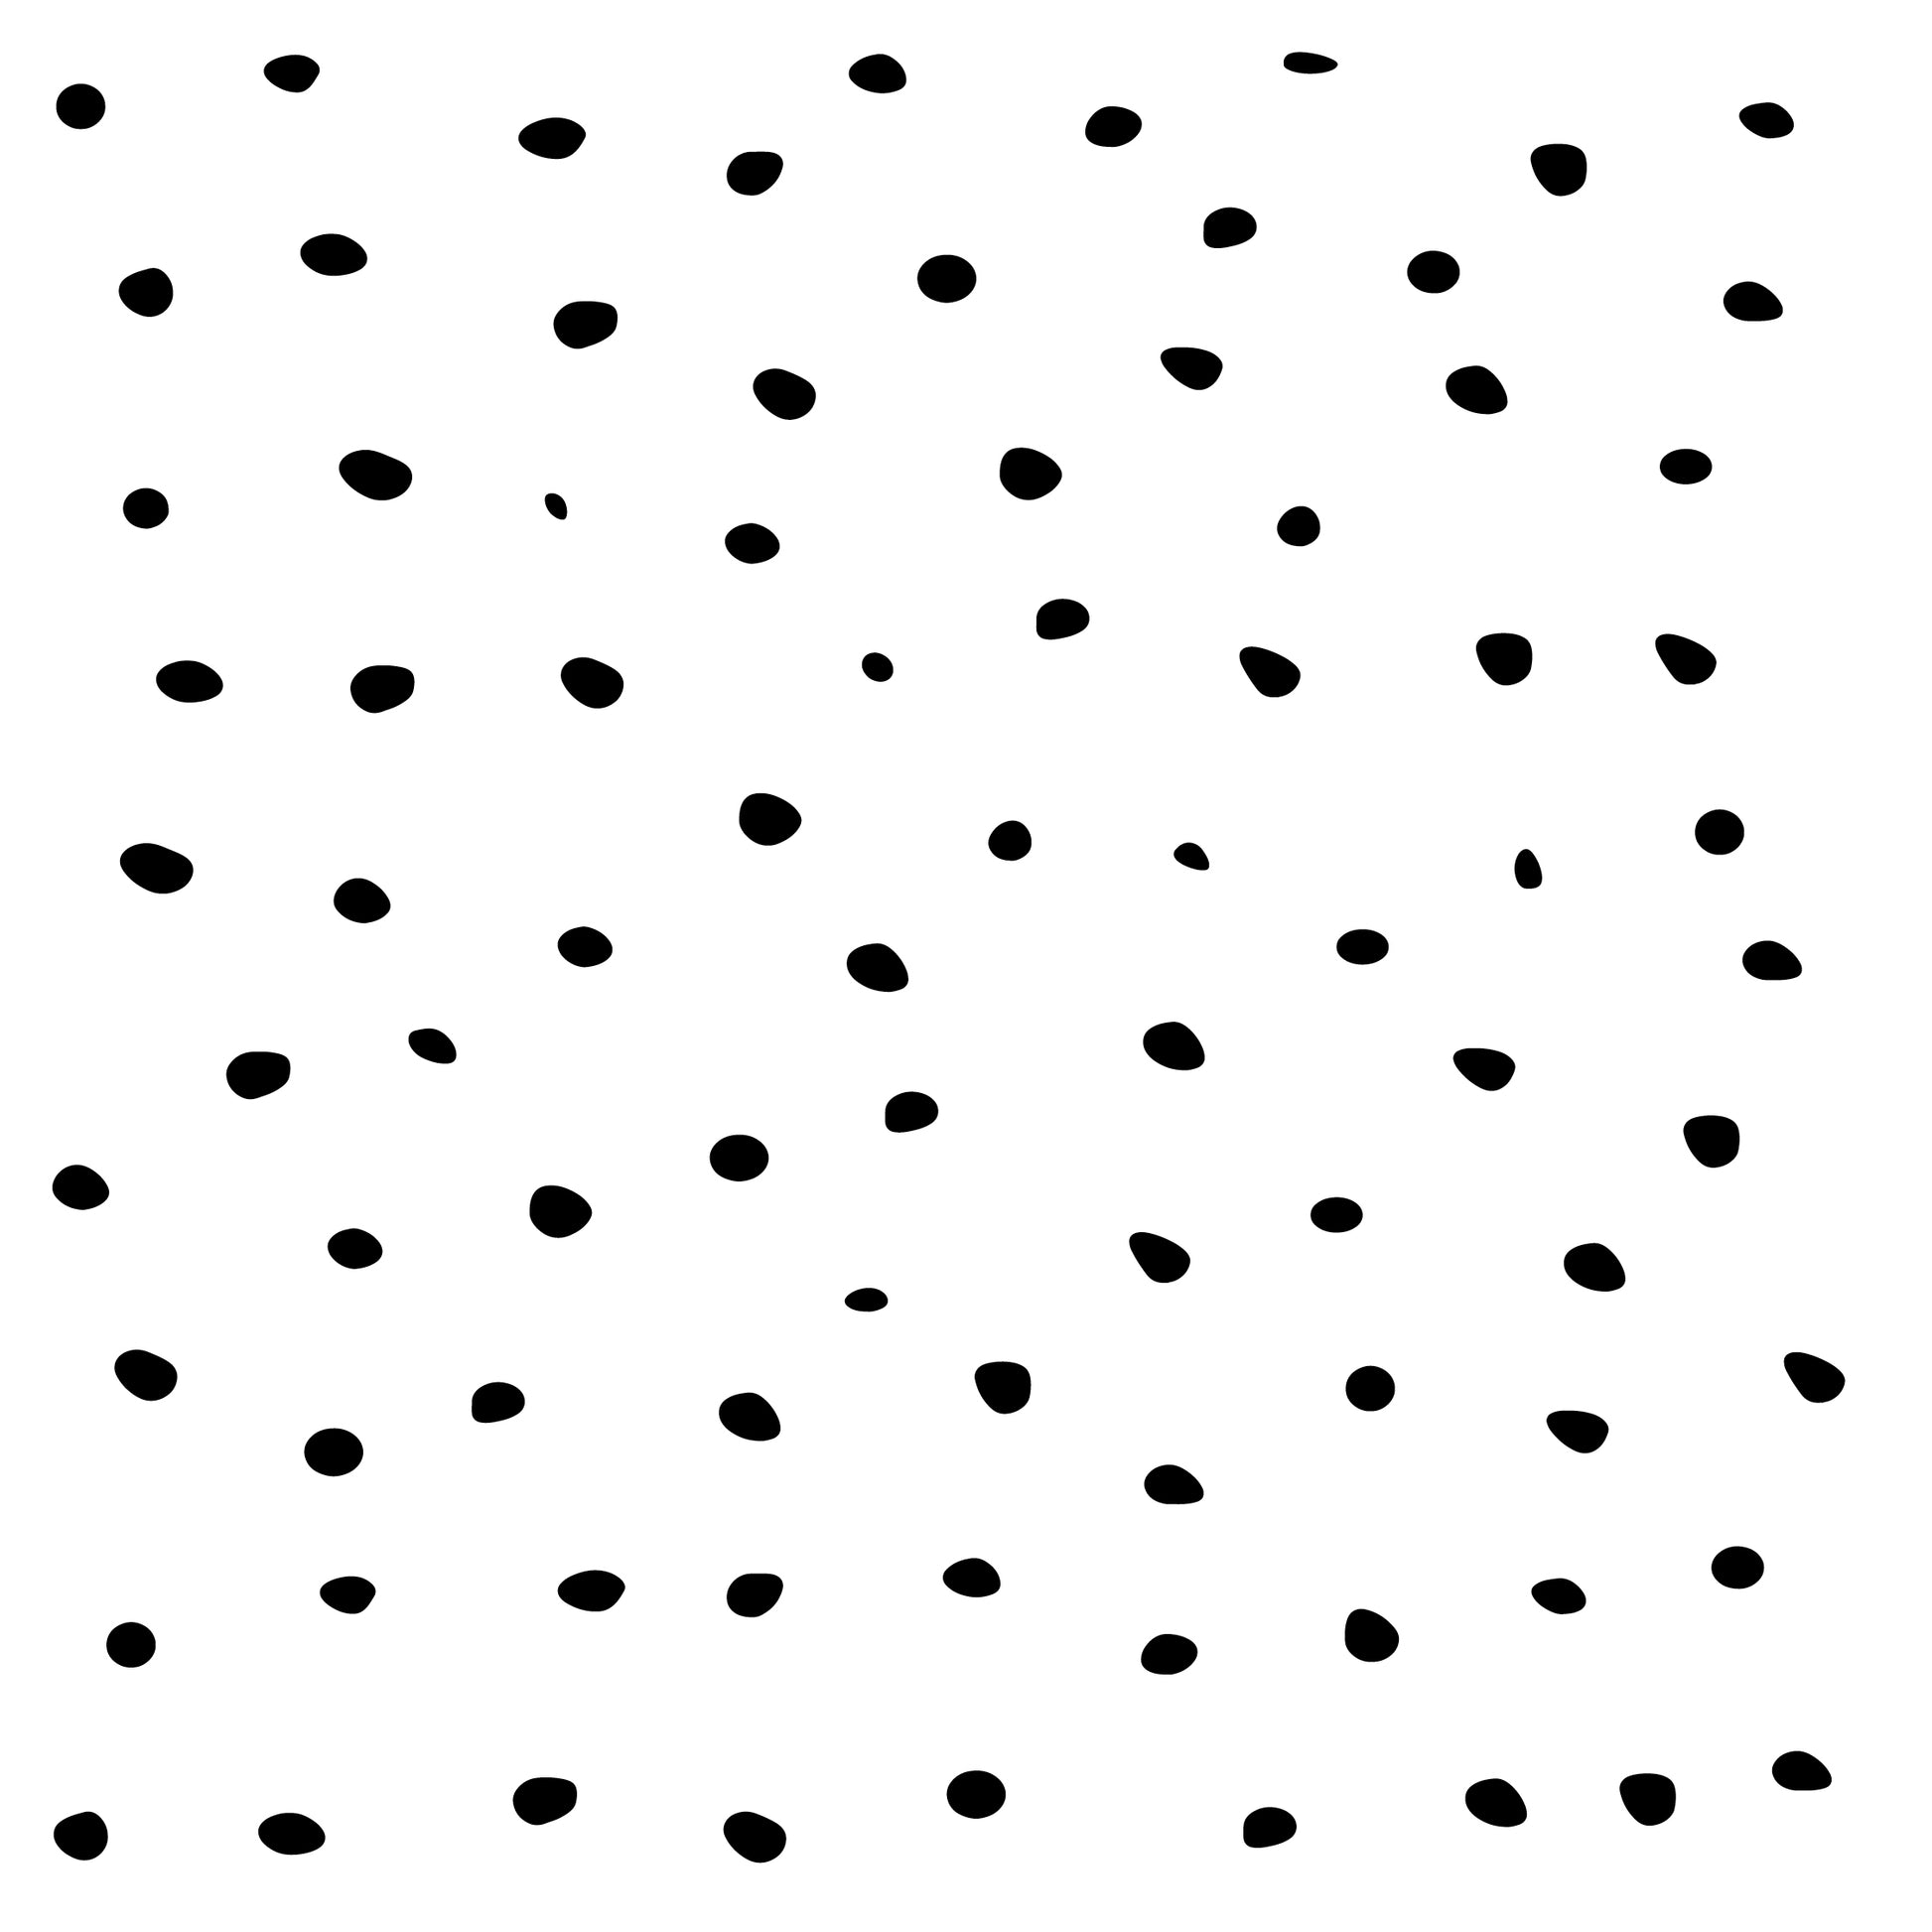 Polka dot wall decal sticker pattern pack design